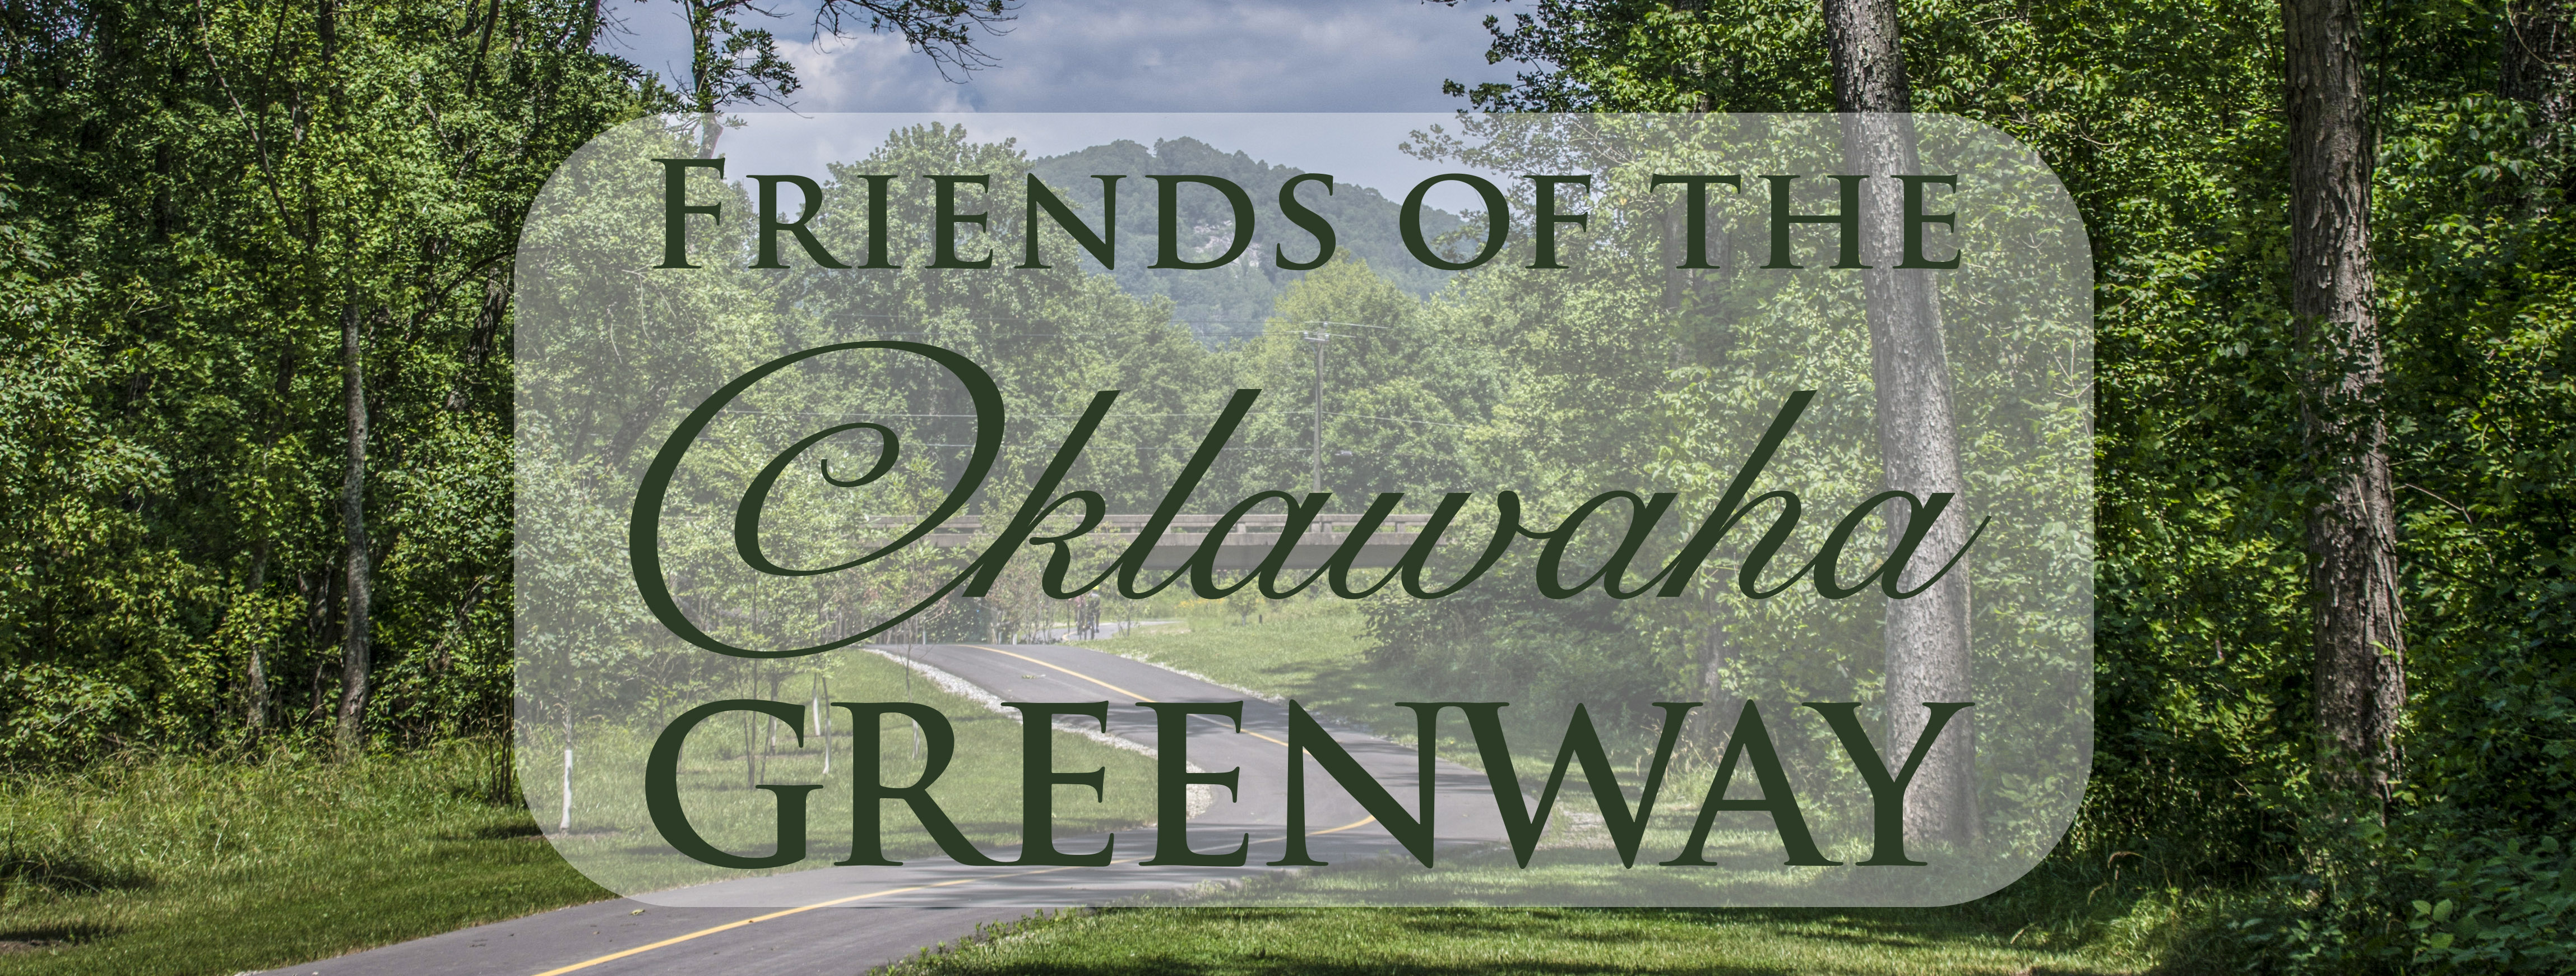 Friends of the Oklawaha Greenway, Hendersonville, NC